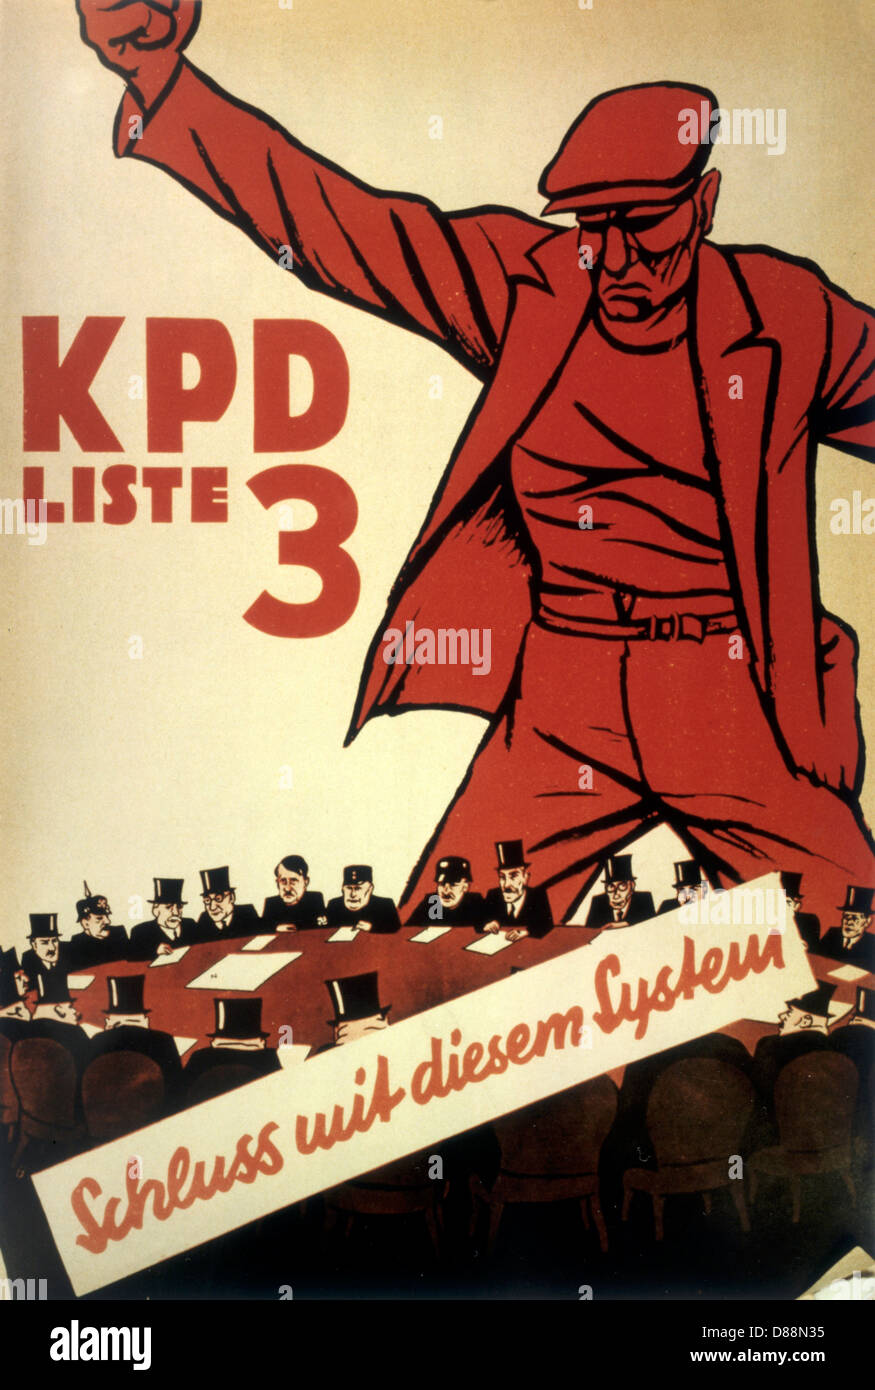 Kpd Poster 1932 Stock Photo